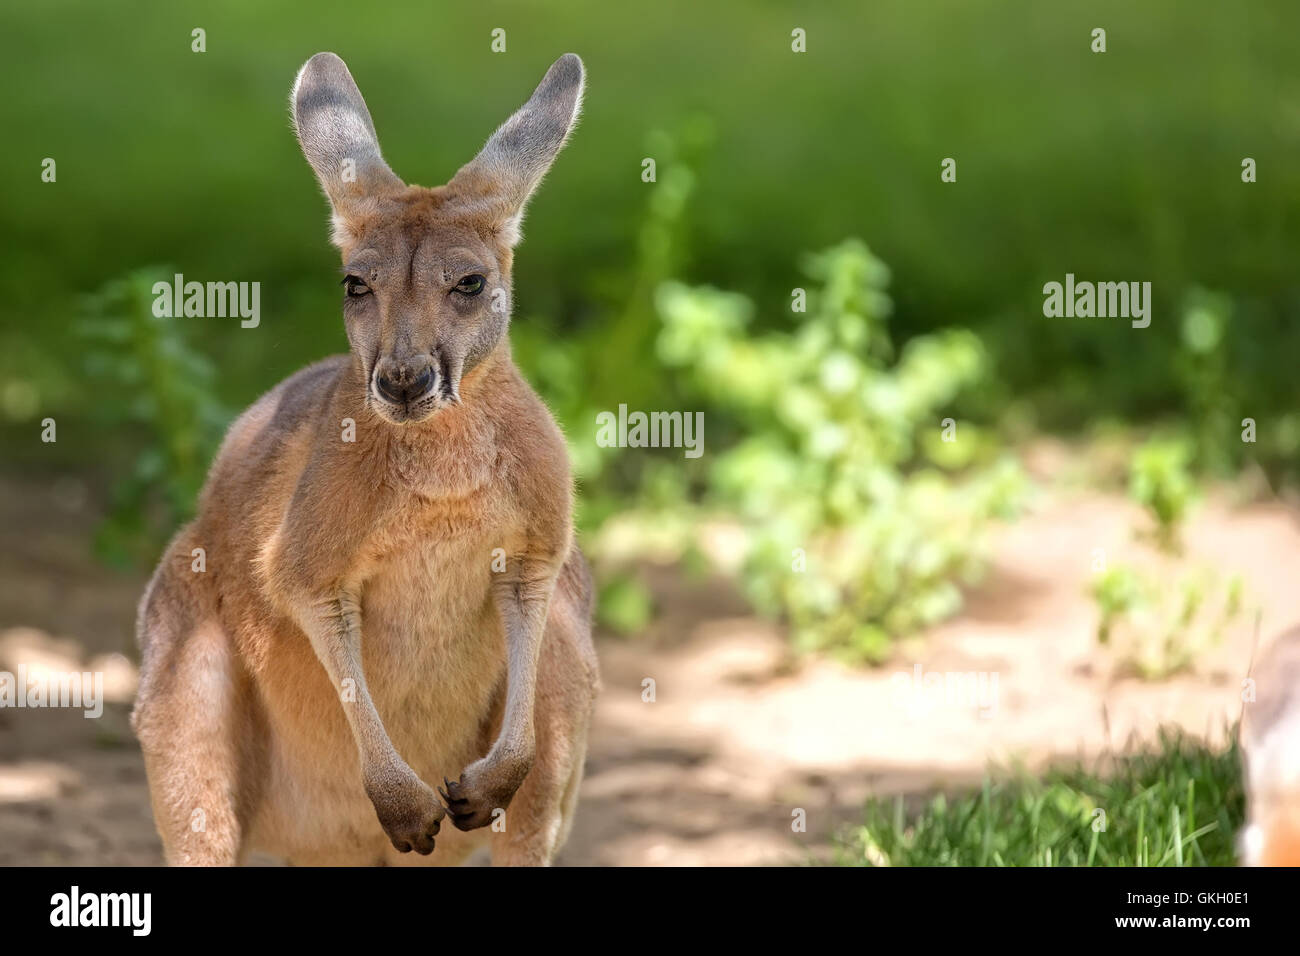 Kangaroo in the wild, a portrait Stock Photo